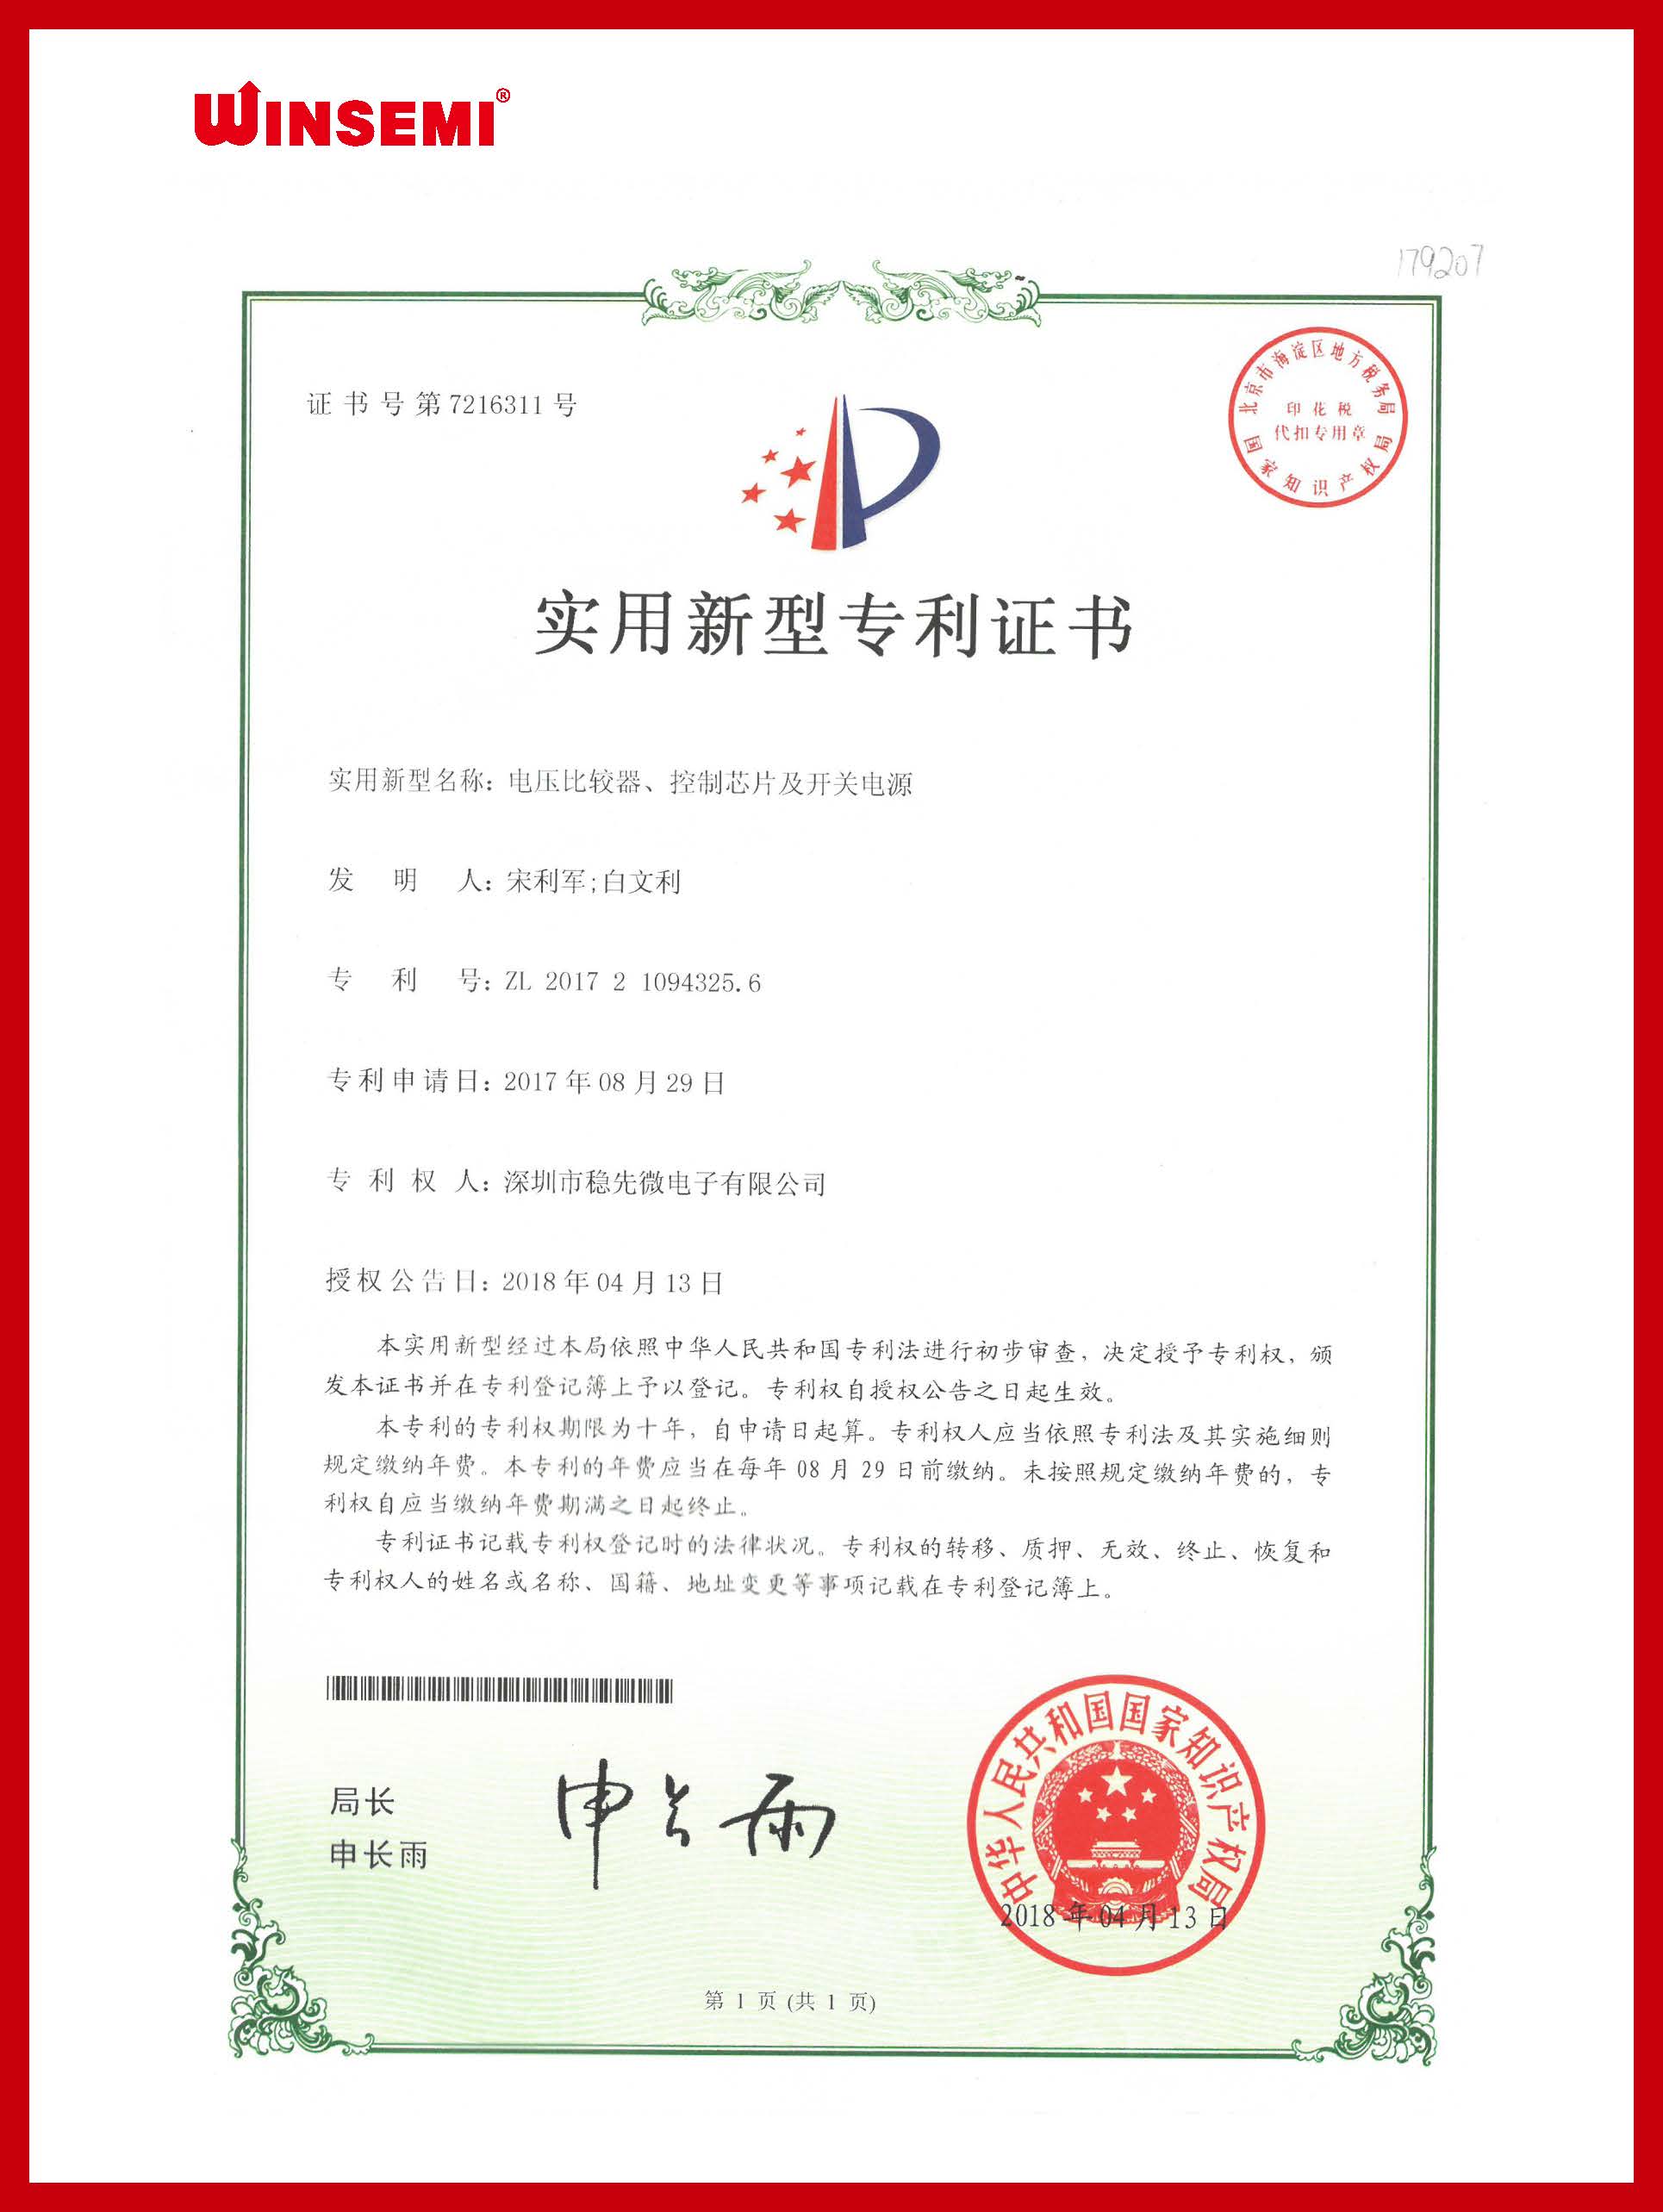 China Patent Certificate